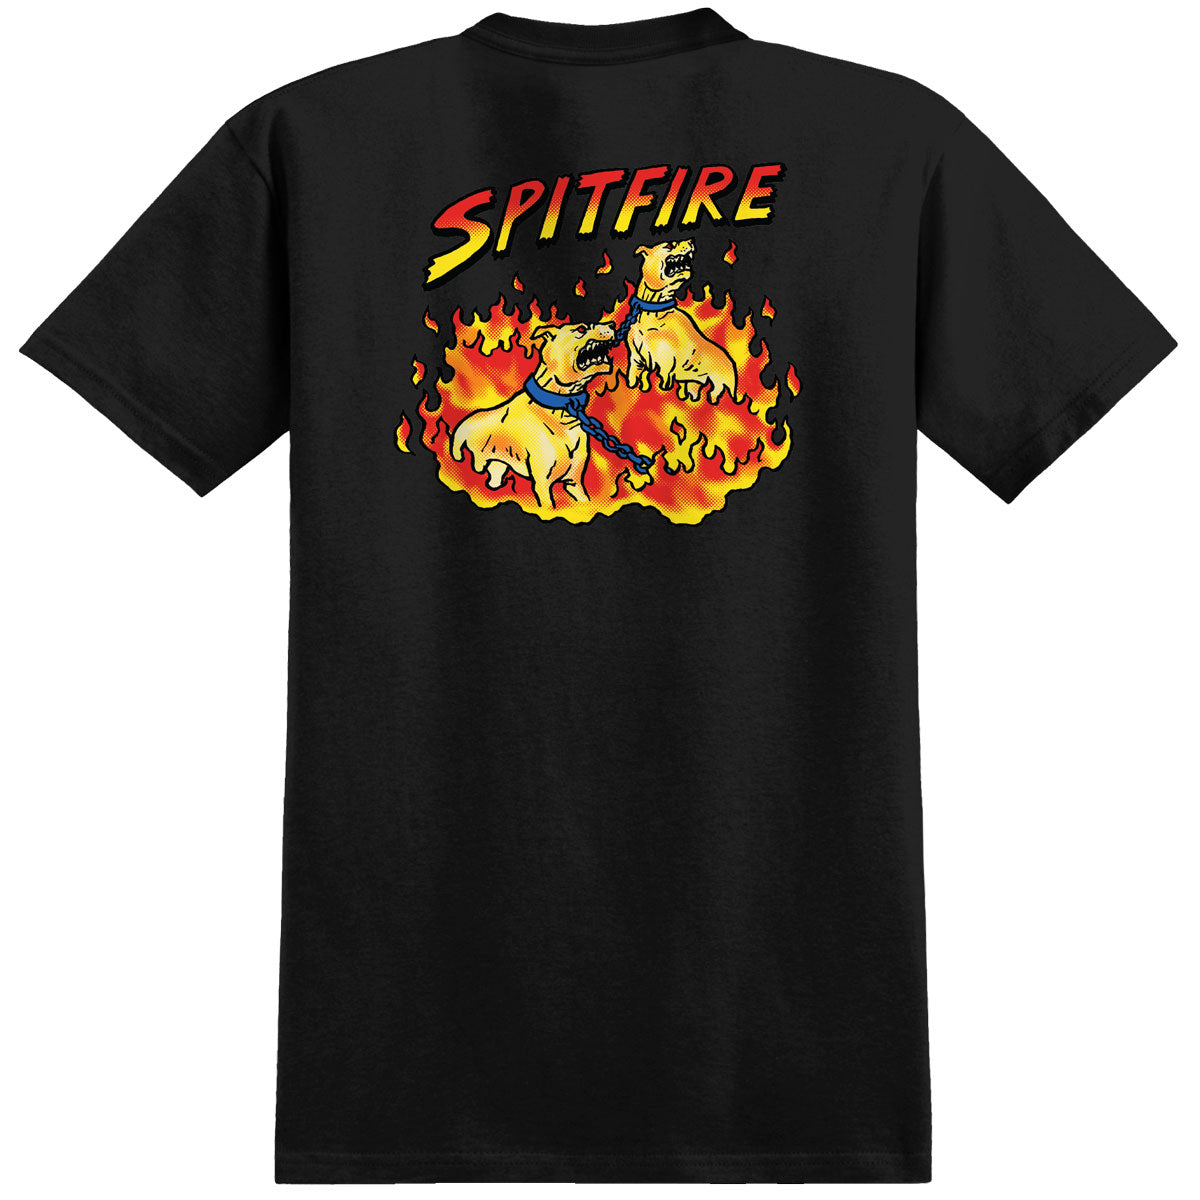 Spitfire Hell Hounds II T-Shirt - Black Multi image 1